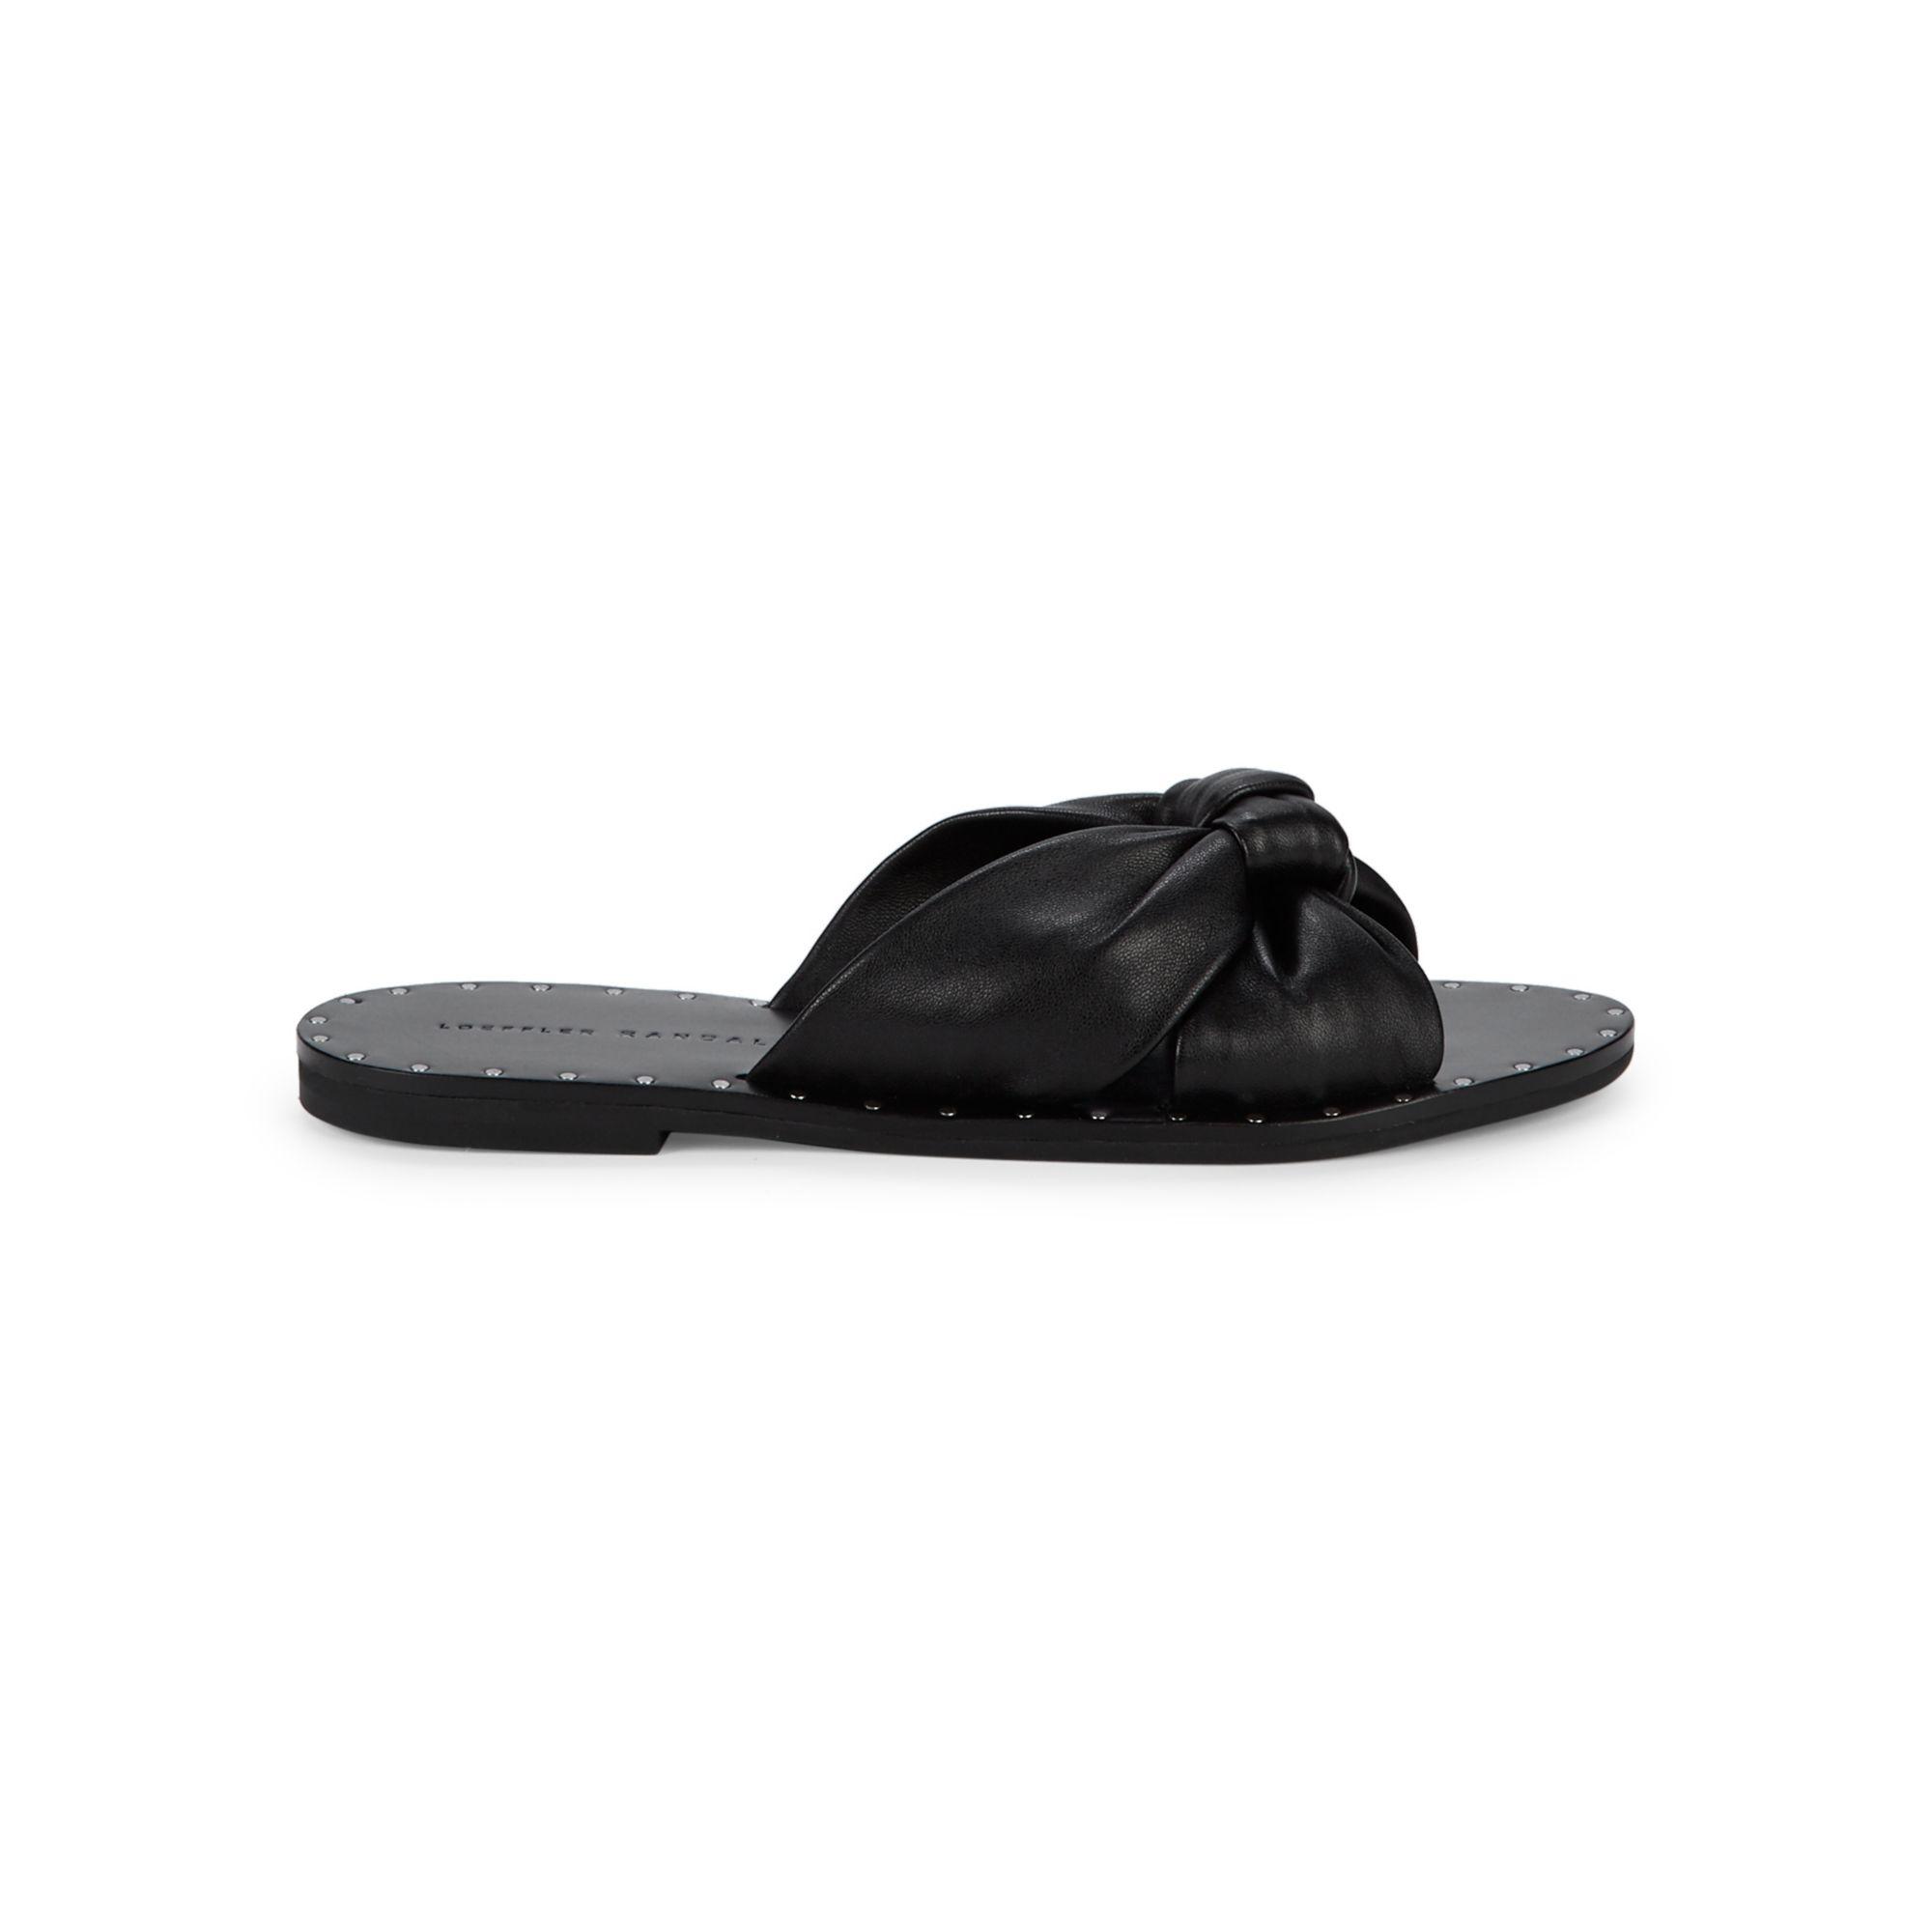 loeffler randall black sandals